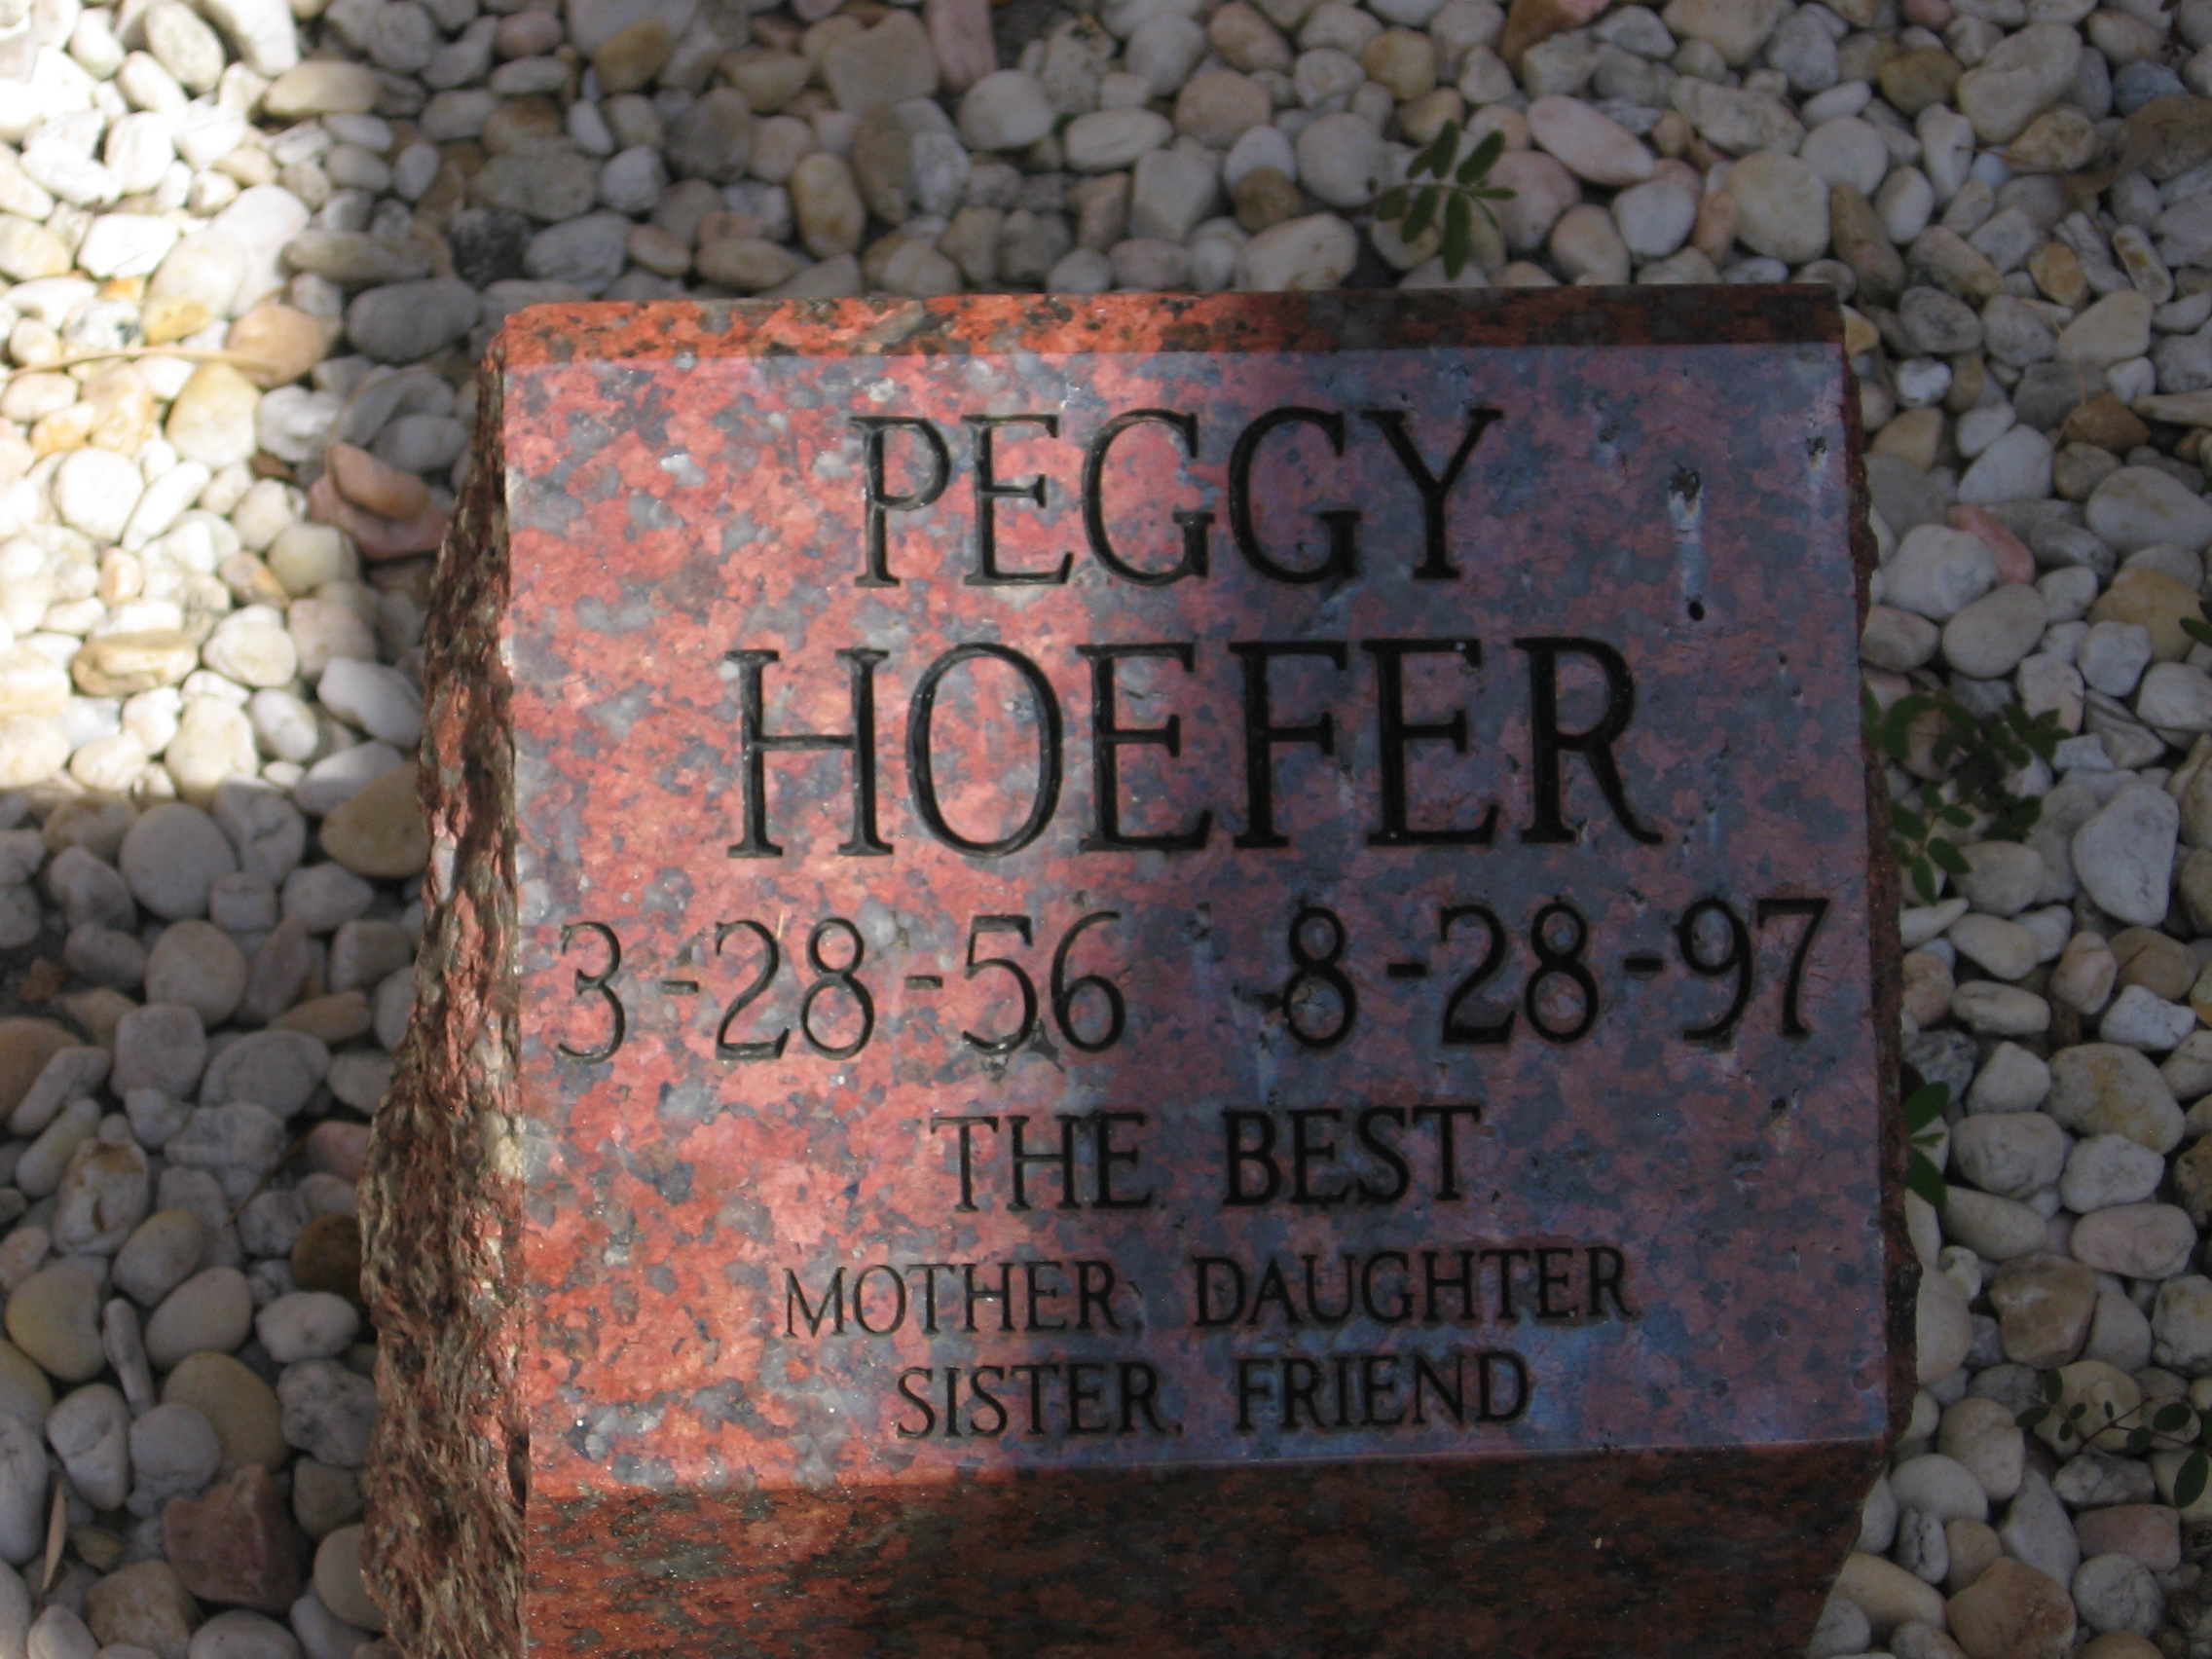 Peggy Hoefer